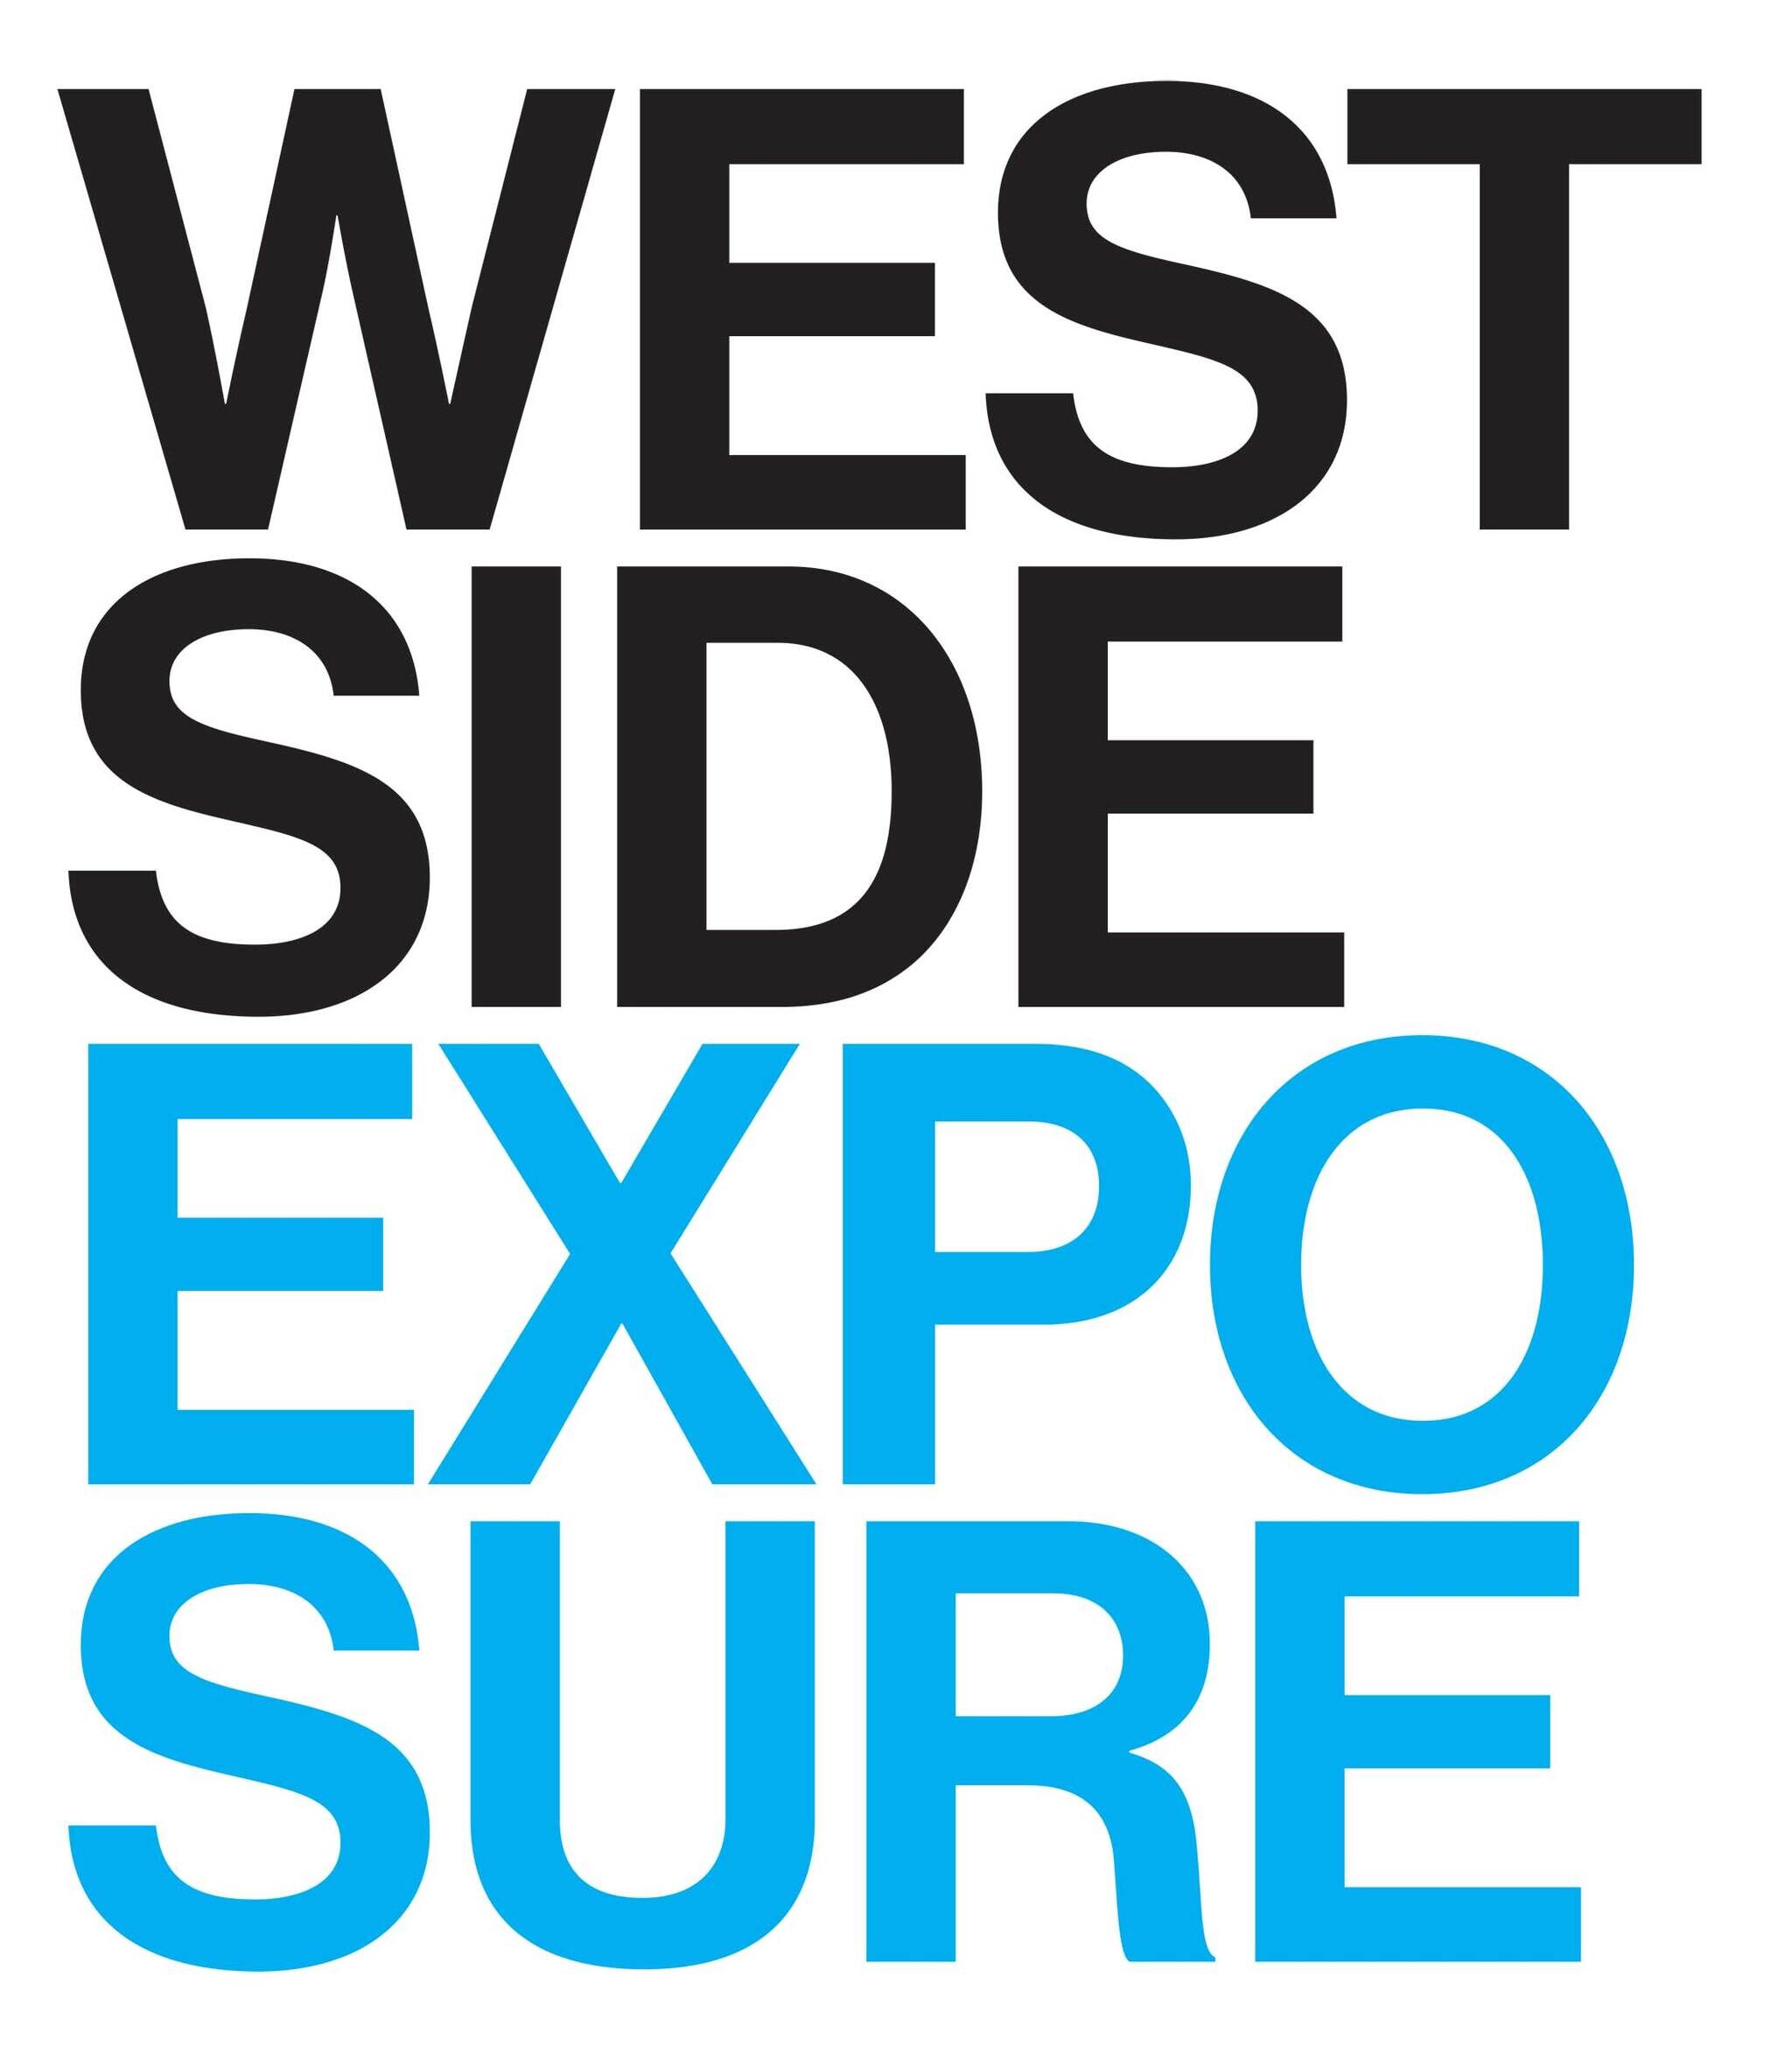 The word "Westside" in black and "Exposure" in blue.